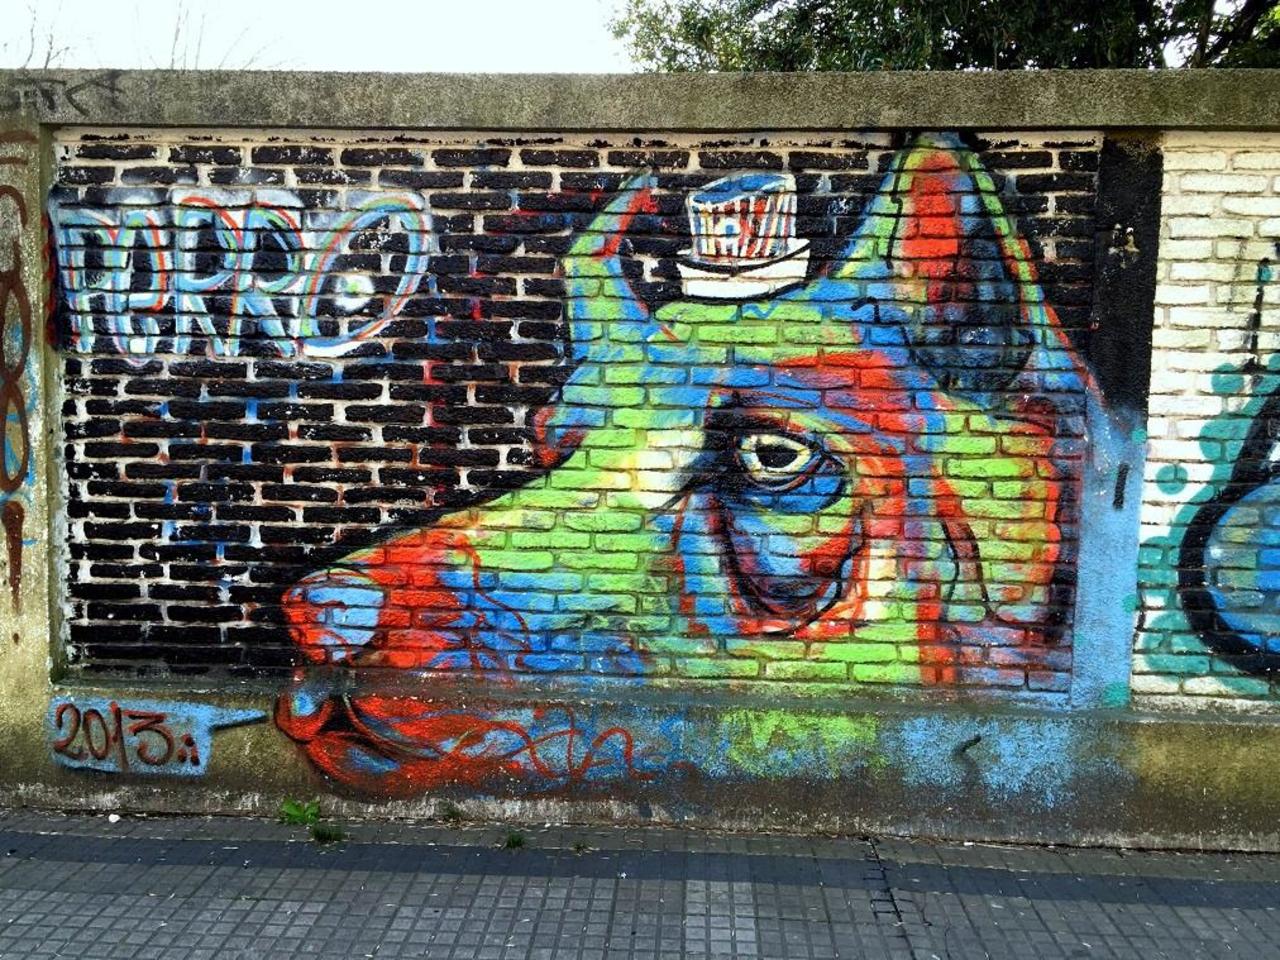 #Graffiti de hoy: << The dog >> calle 9, 66y67 #LaPlata #Argentina #StreetArt #UrbanArt #ArteUrbano http://t.co/9AtzwaLUze